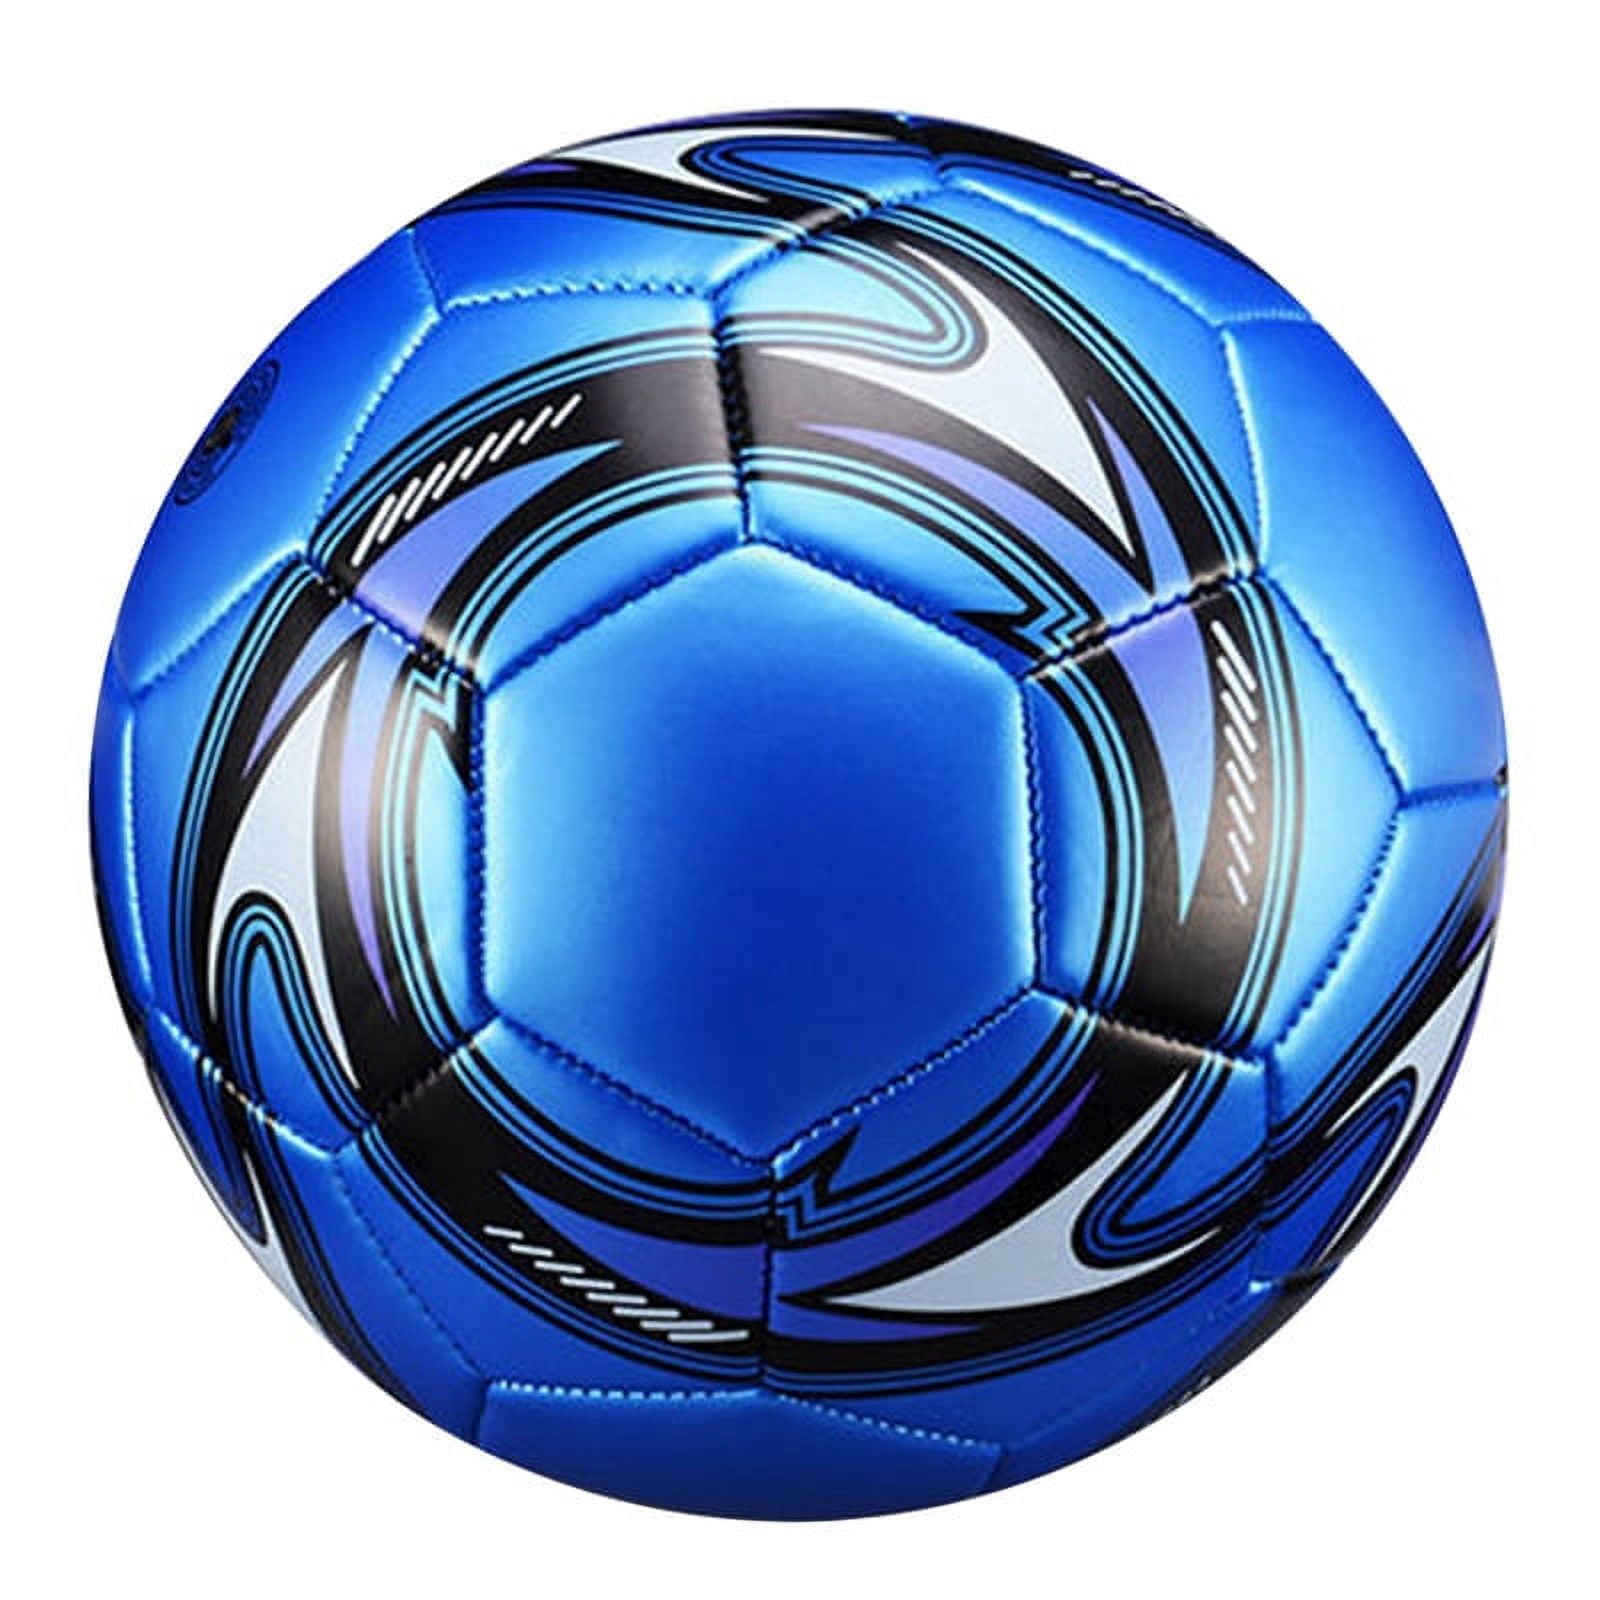 Professional Soccer Ball Size 5 Soccer Training Football Ball